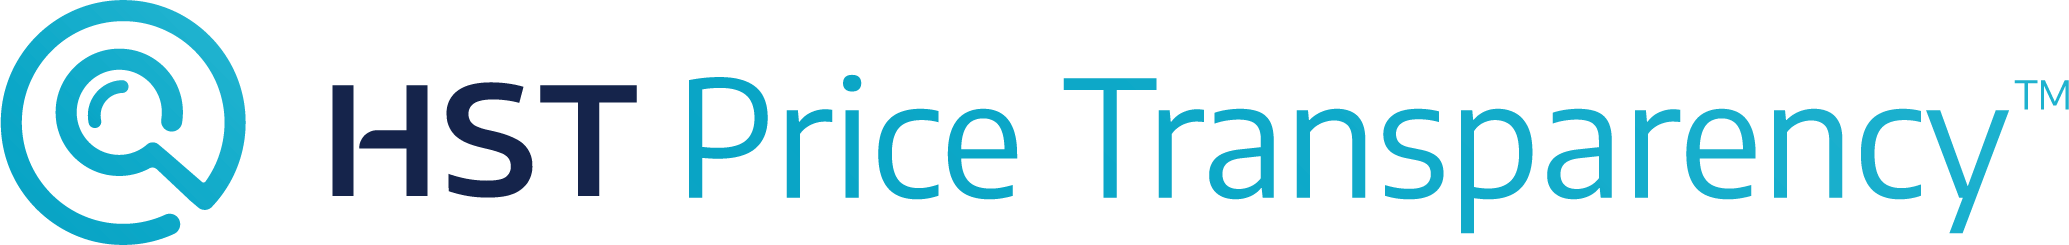 HST Price Transparency Logo